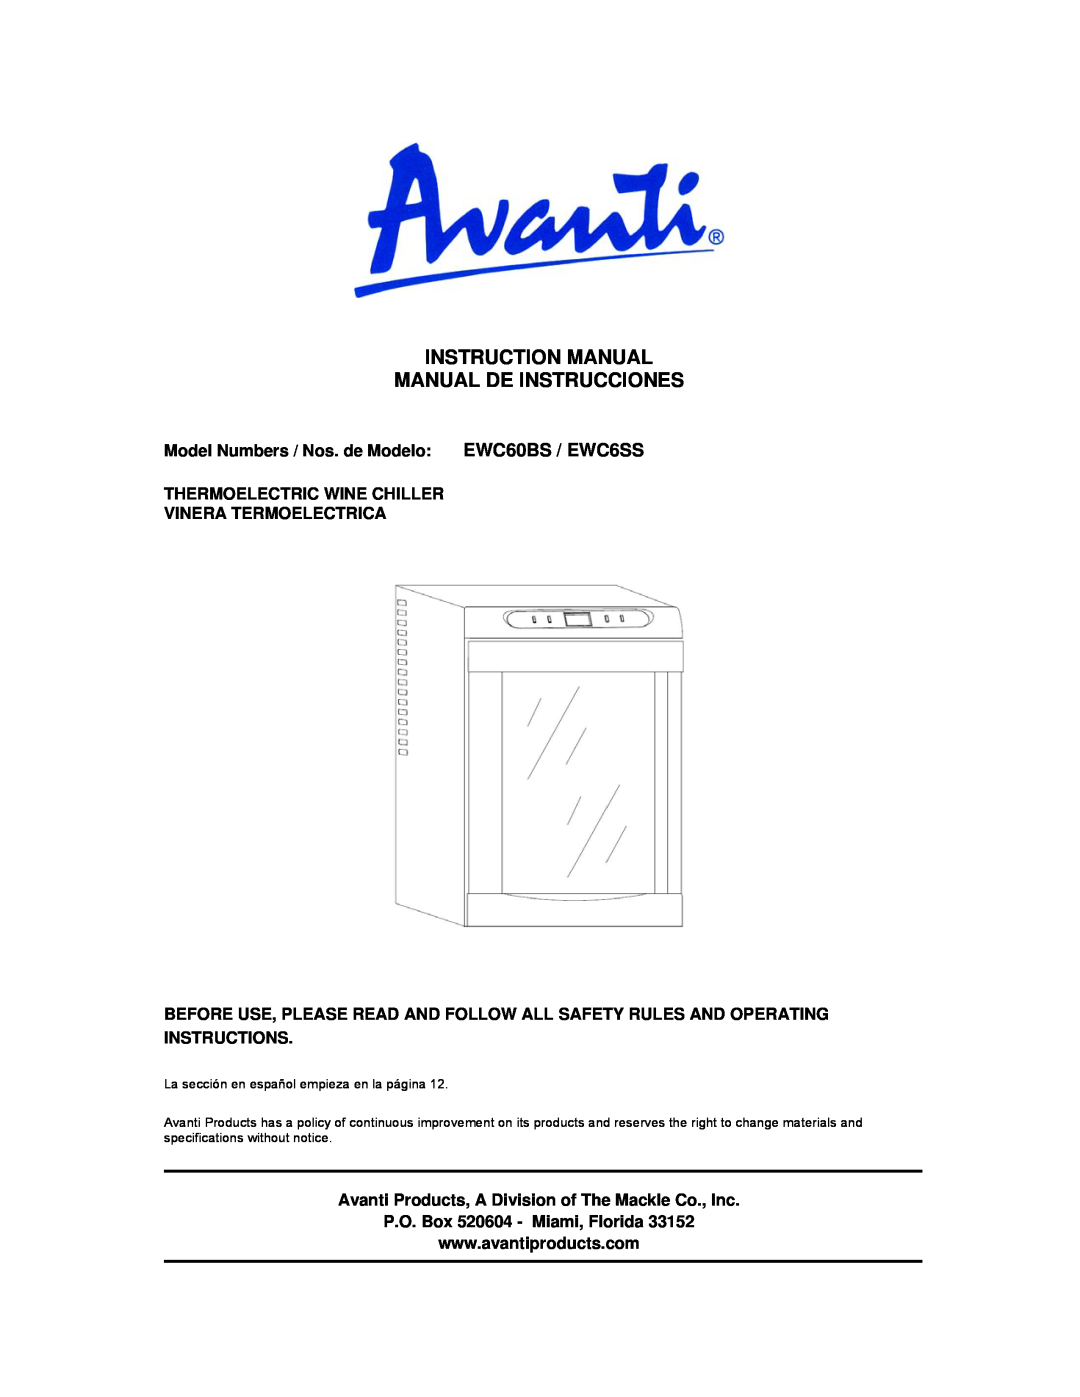 Avanti EWC6SS, EWC60BS instruction manual Instruction Manual Manual De Instrucciones, P.O. Box 520604 - Miami, Florida 